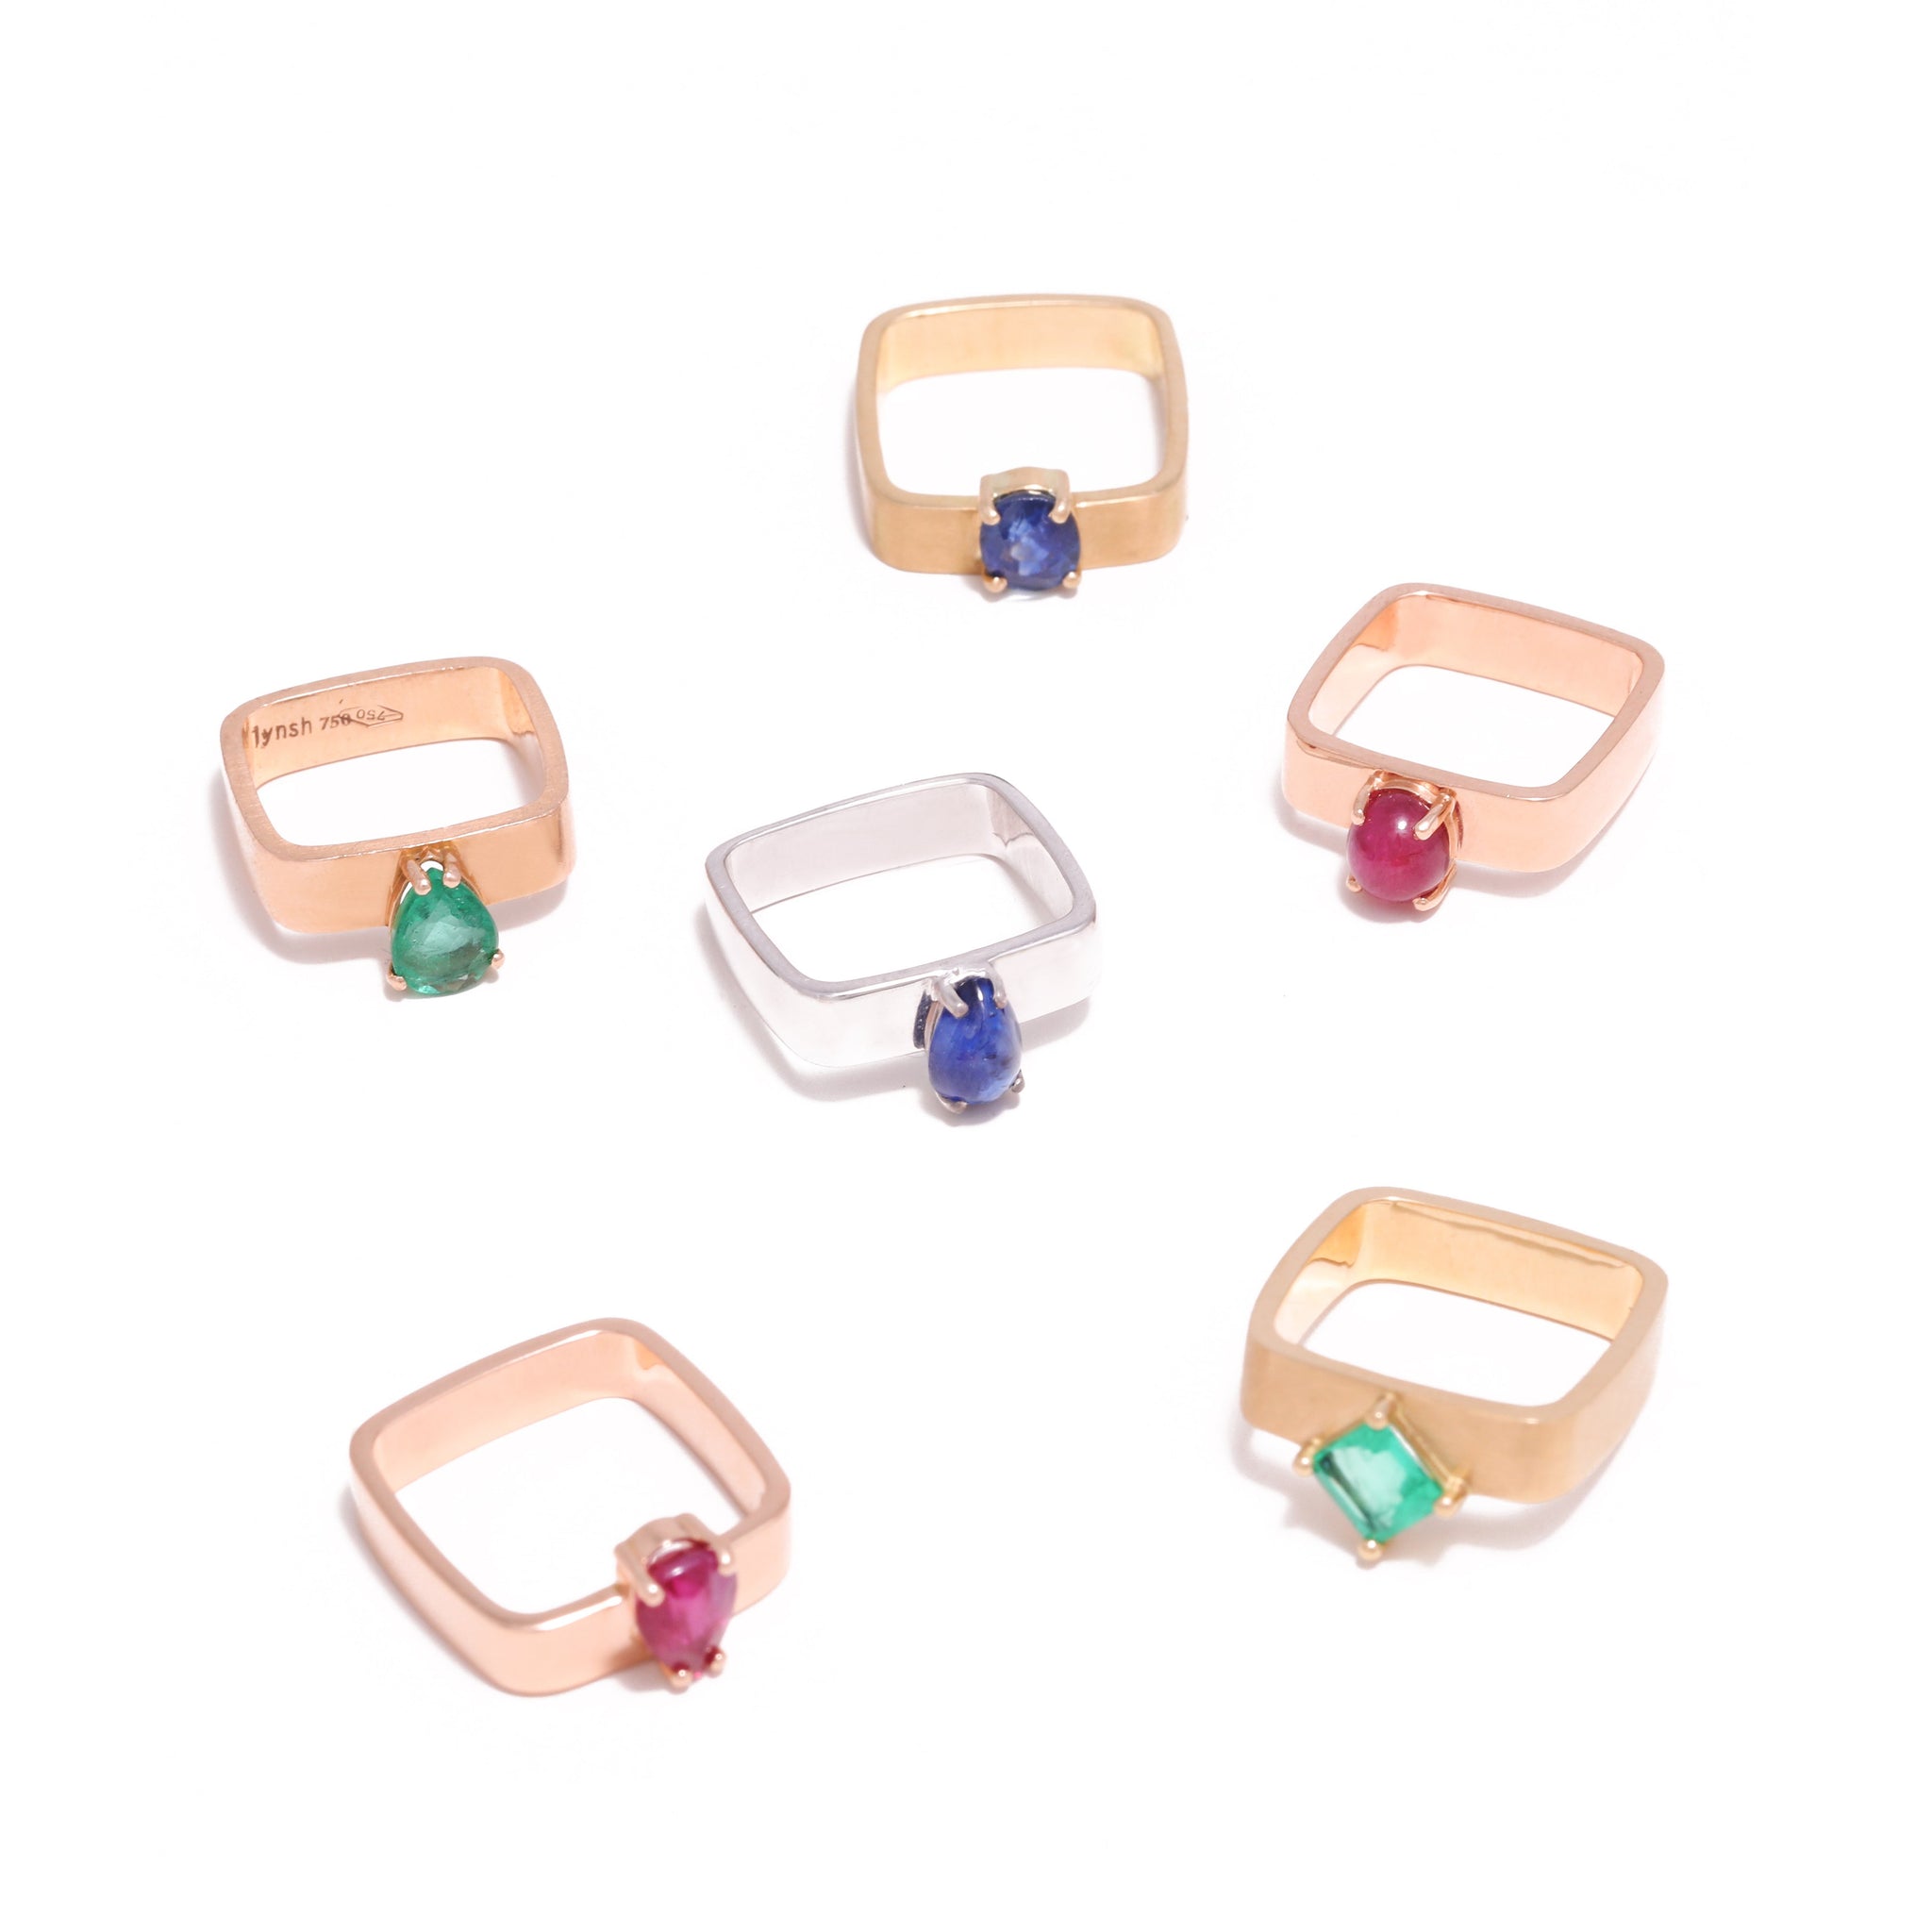 Zelda1.1-ring-lynsh-jewelry